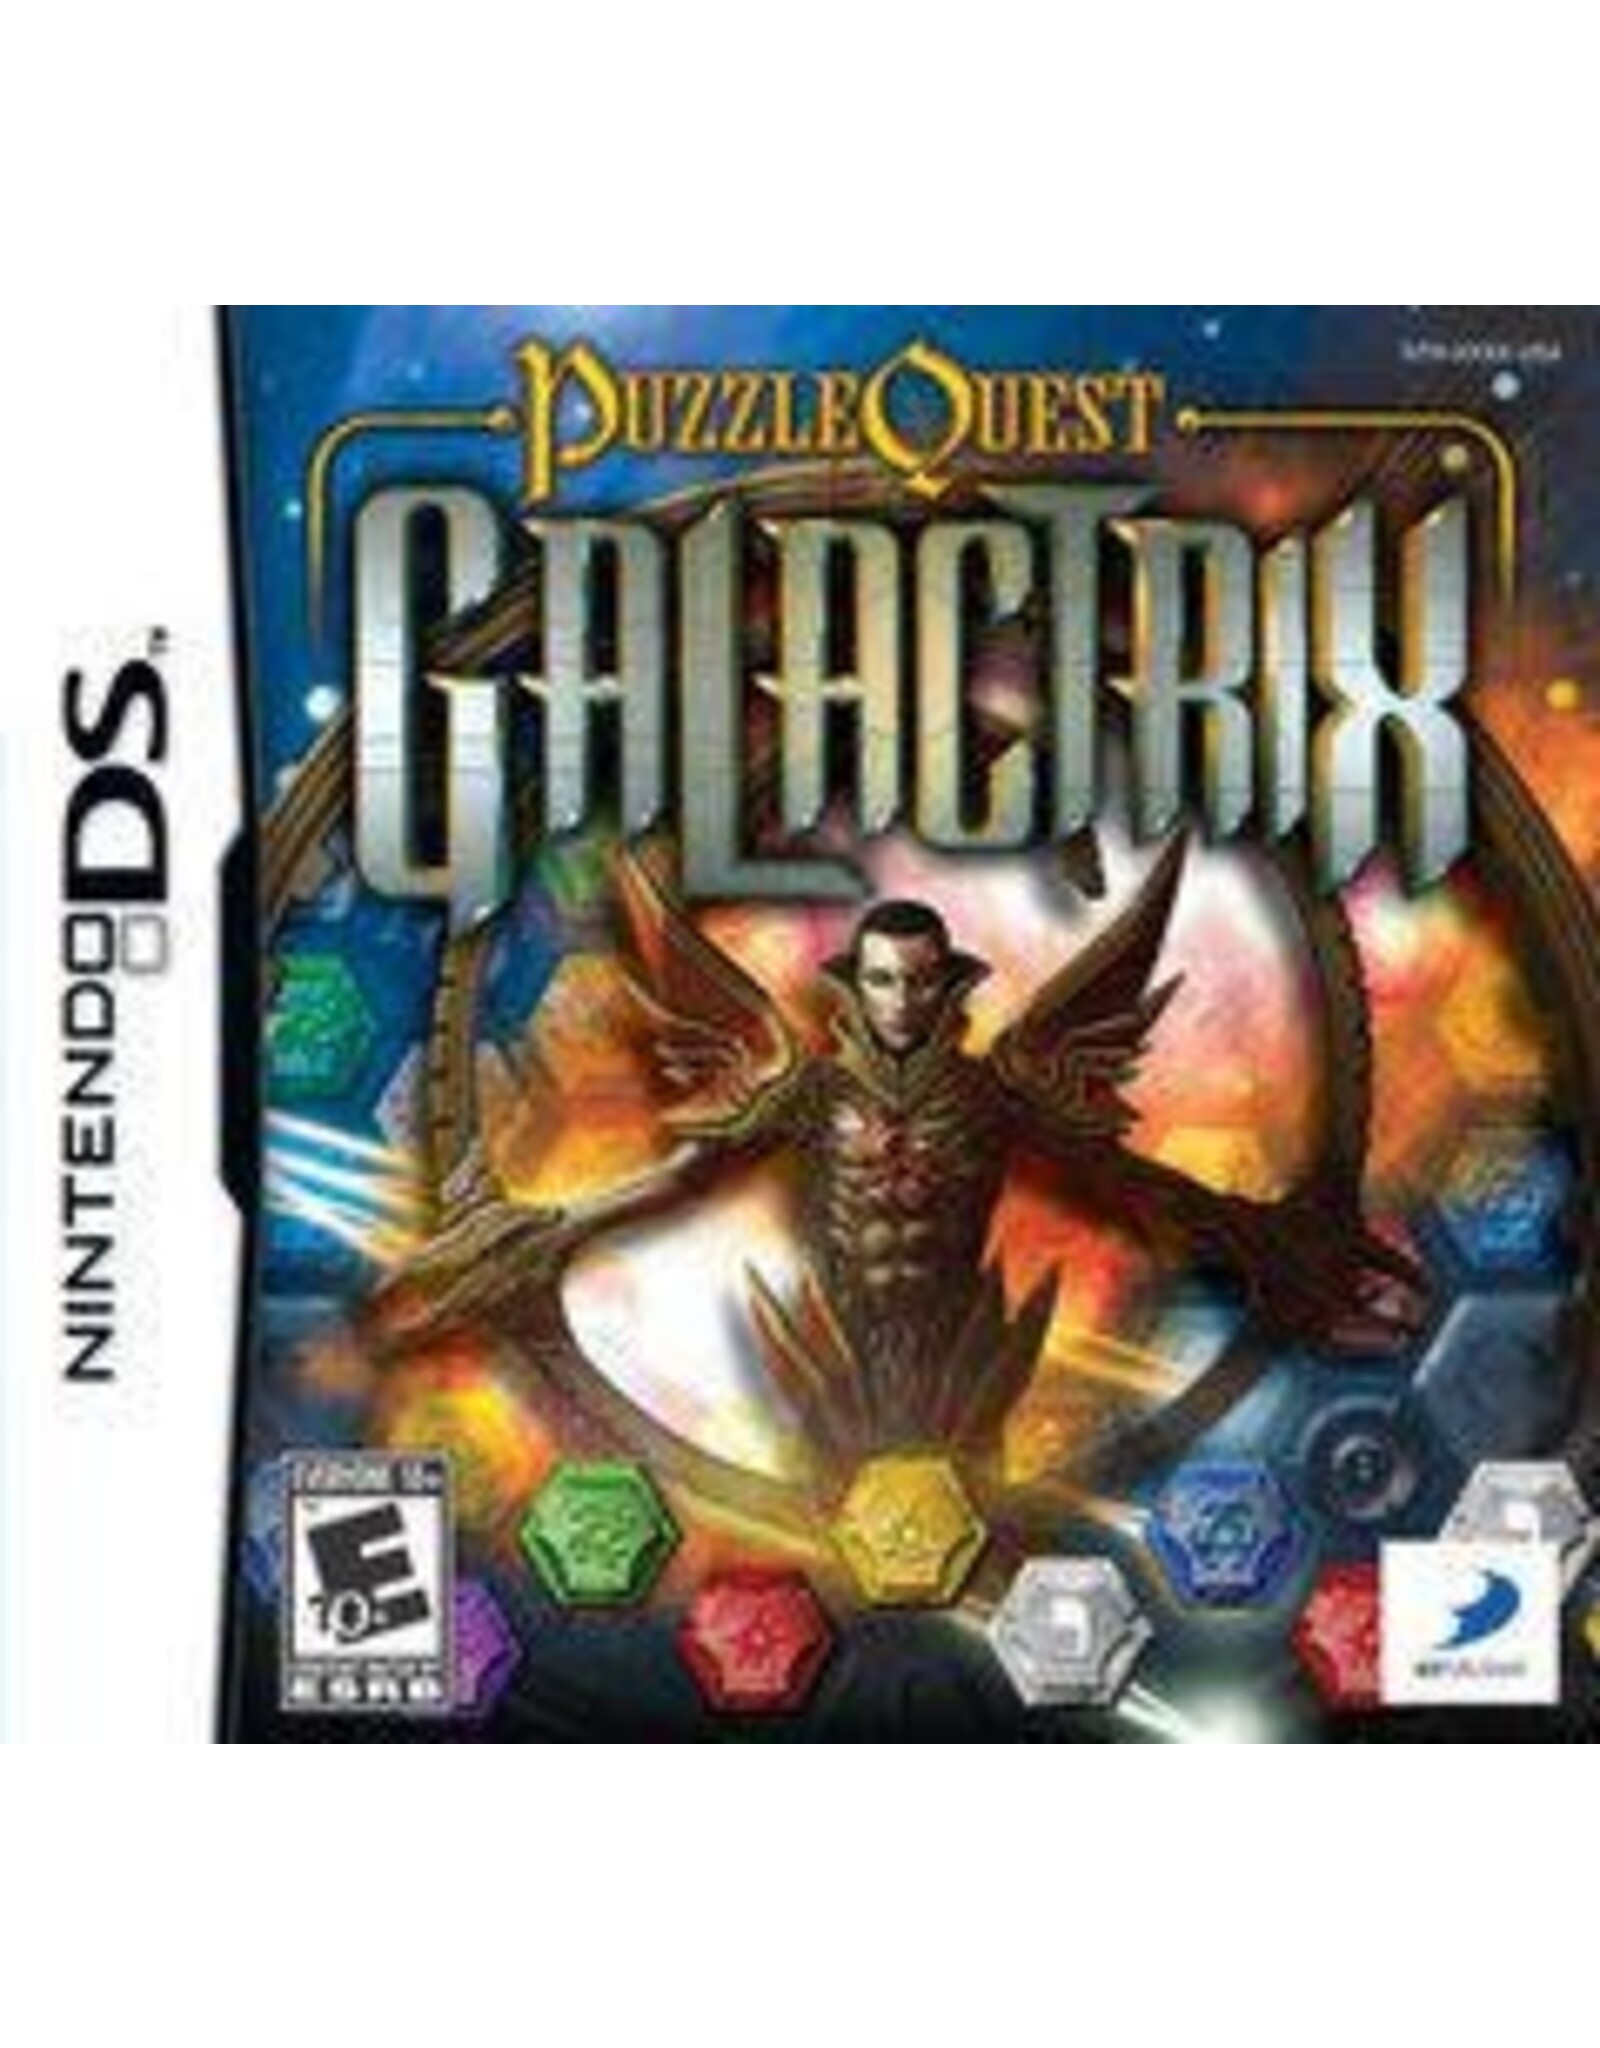 Nintendo DS Puzzle Quest: Galactrix (CiB)